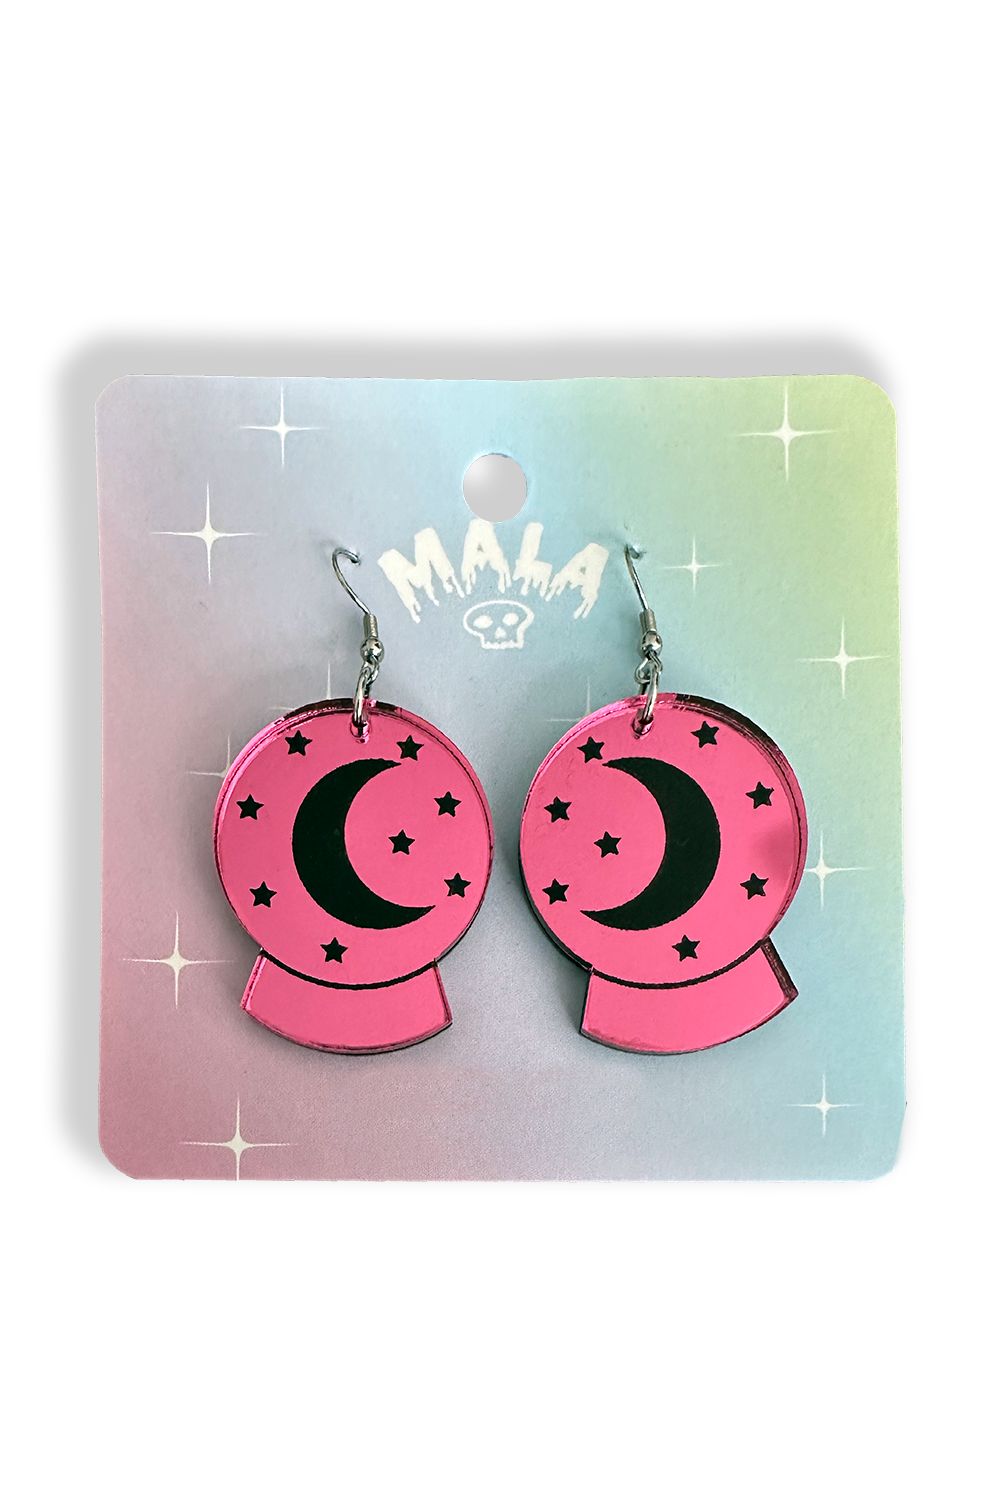 Crystal Ball Acrylic Earrings in Pink